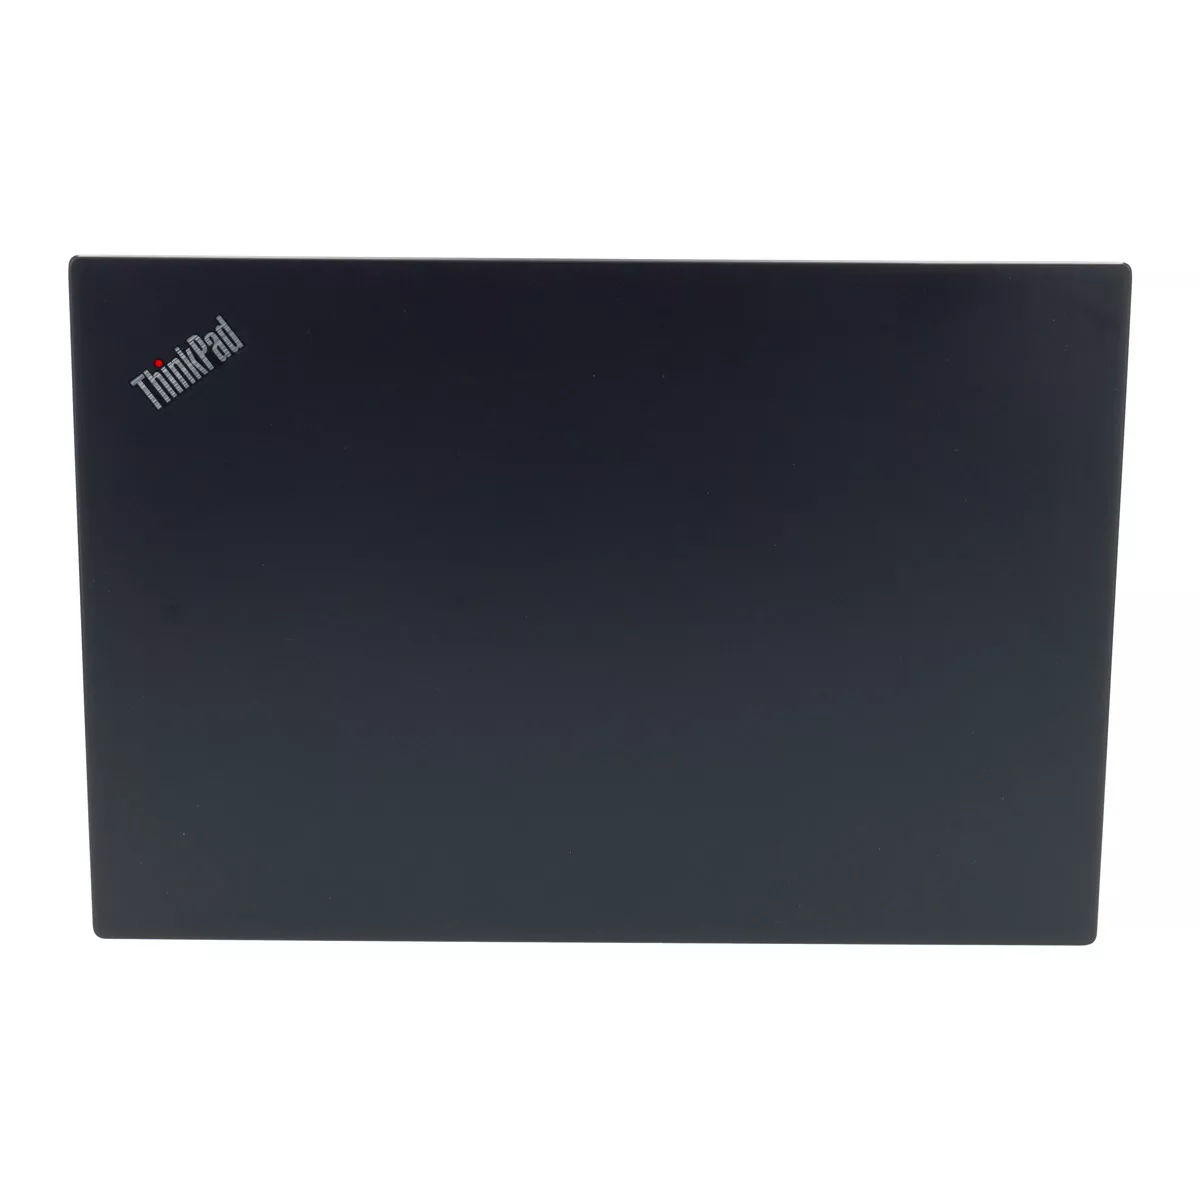 Lenovo ThinkPad T495 AMD Ryzen 7 Pro 3700U Full-HD Touch 500 GB M.2 nVME SSD Webcam B